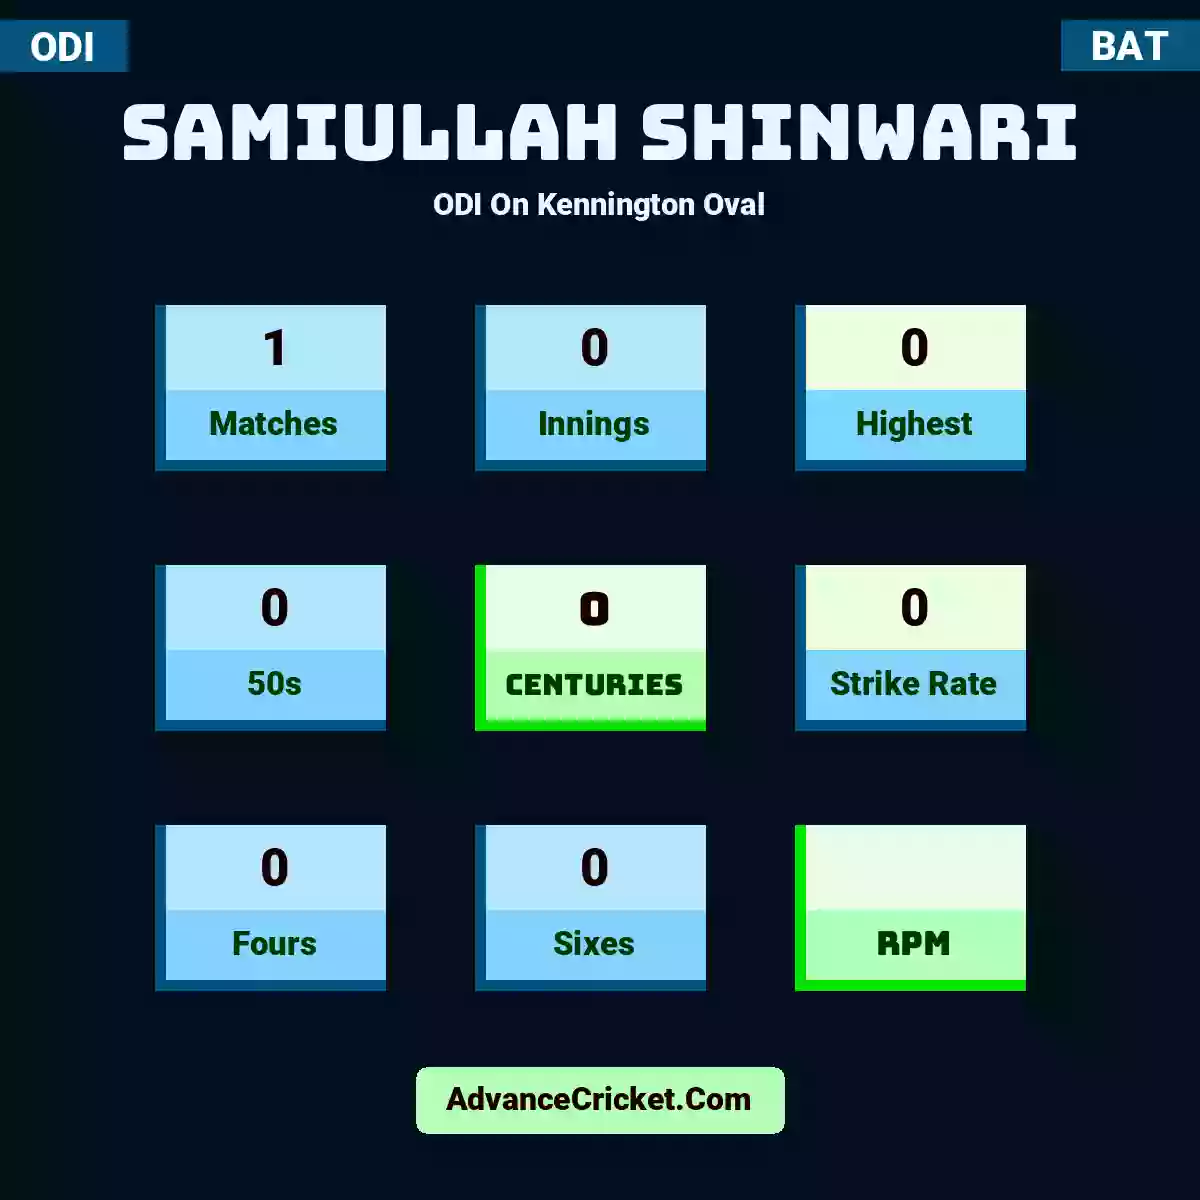 Samiullah Shinwari ODI  On Kennington Oval, Samiullah Shinwari played 1 matches, scored 0 runs as highest, 0 half-centuries, and 0 centuries, with a strike rate of 0. S.Shinwari hit 0 fours and 0 sixes.